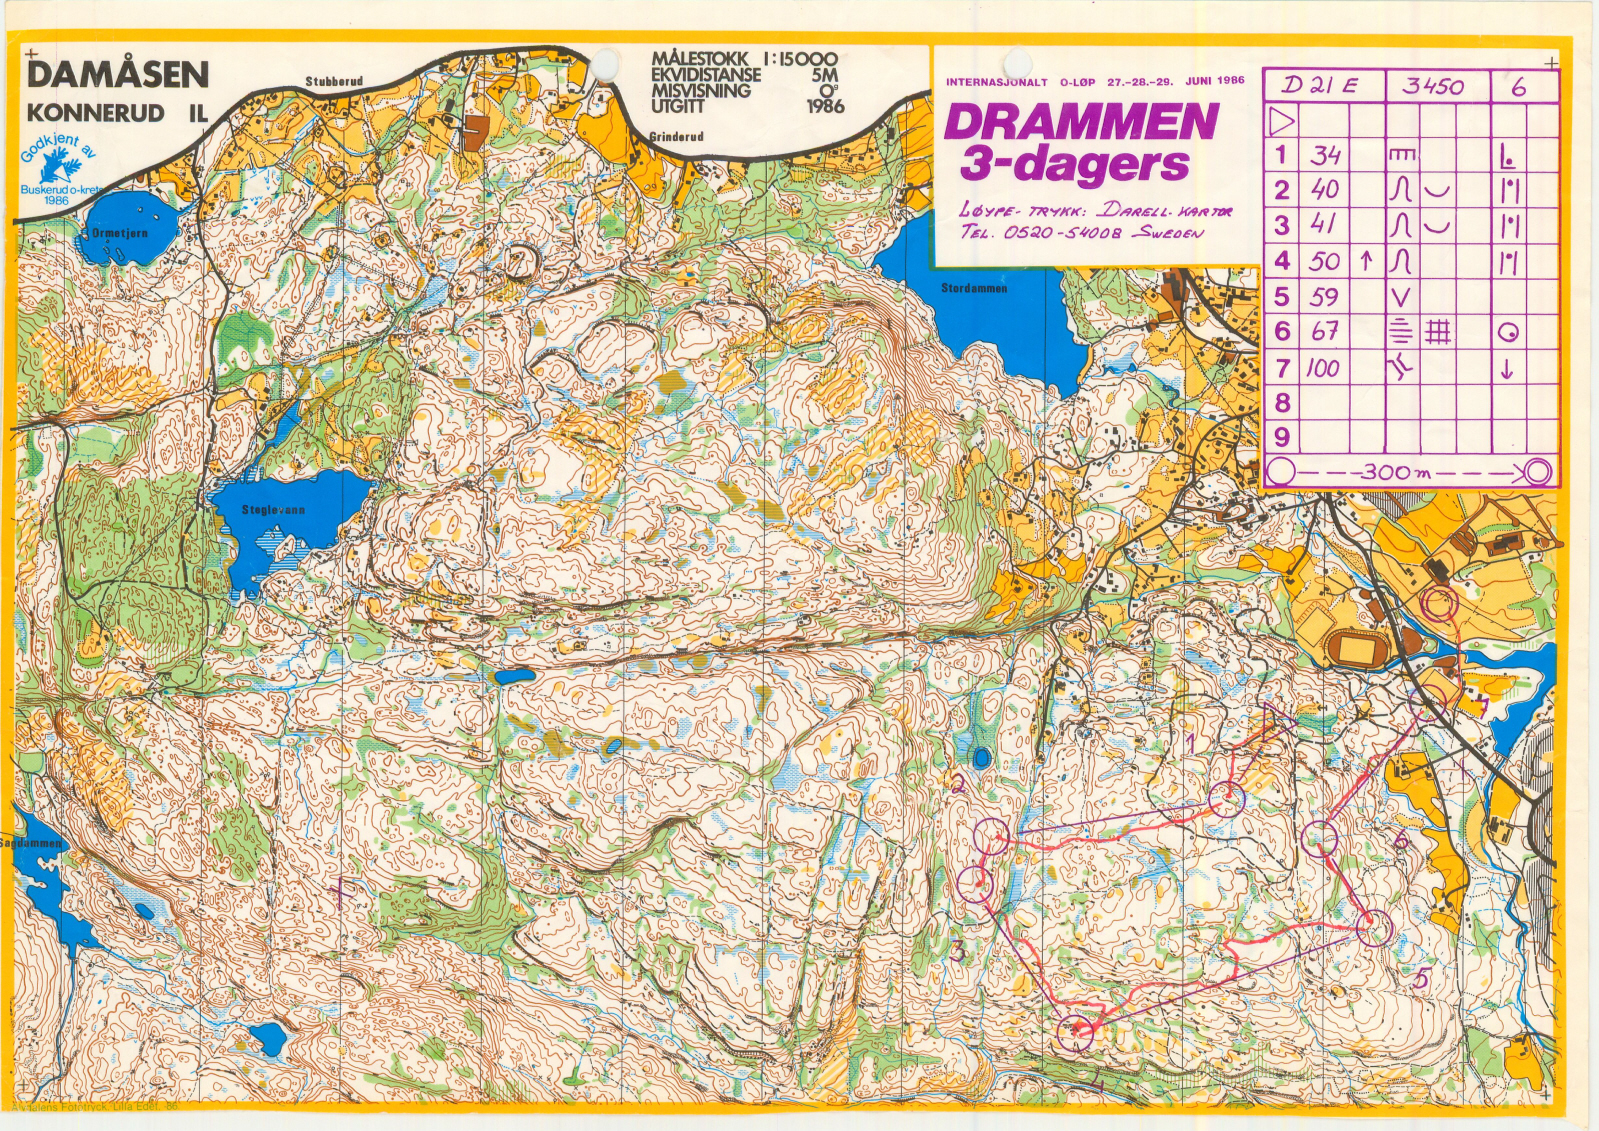 Drammen 3-dagers etappe 1 (27-06-1986)